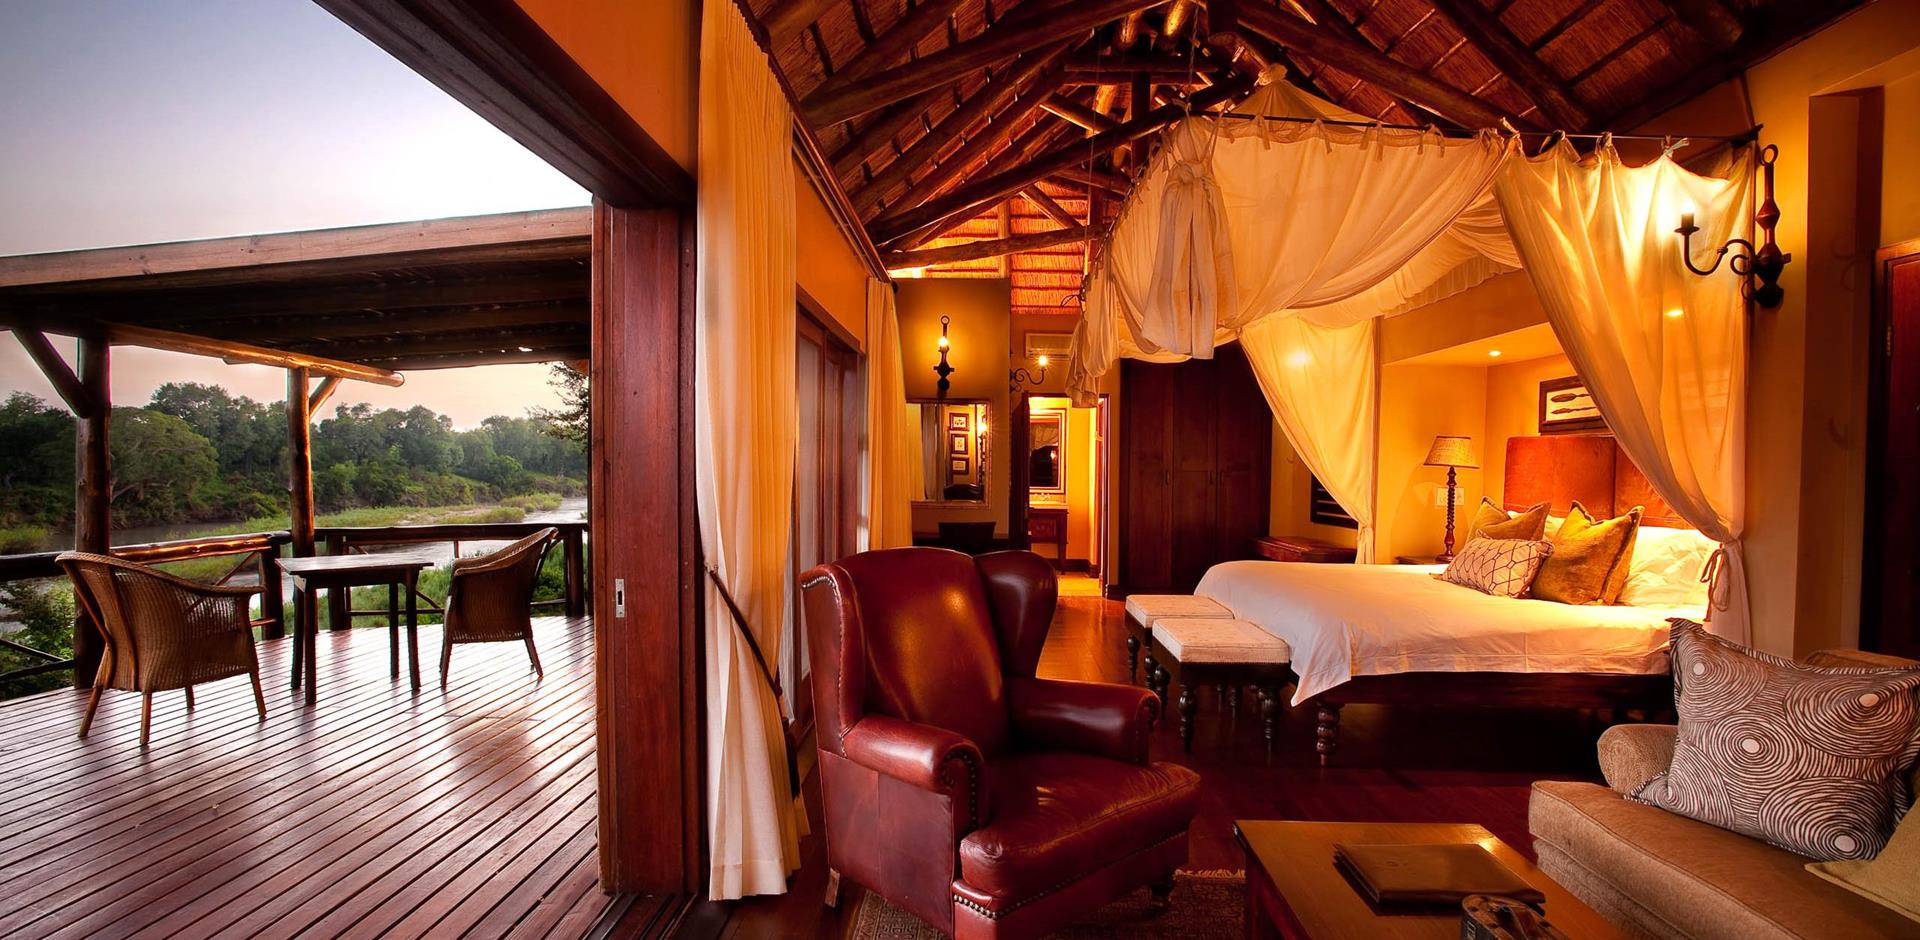 Bedroom, Lion Sands Narina Lodge, South Africa, A&K